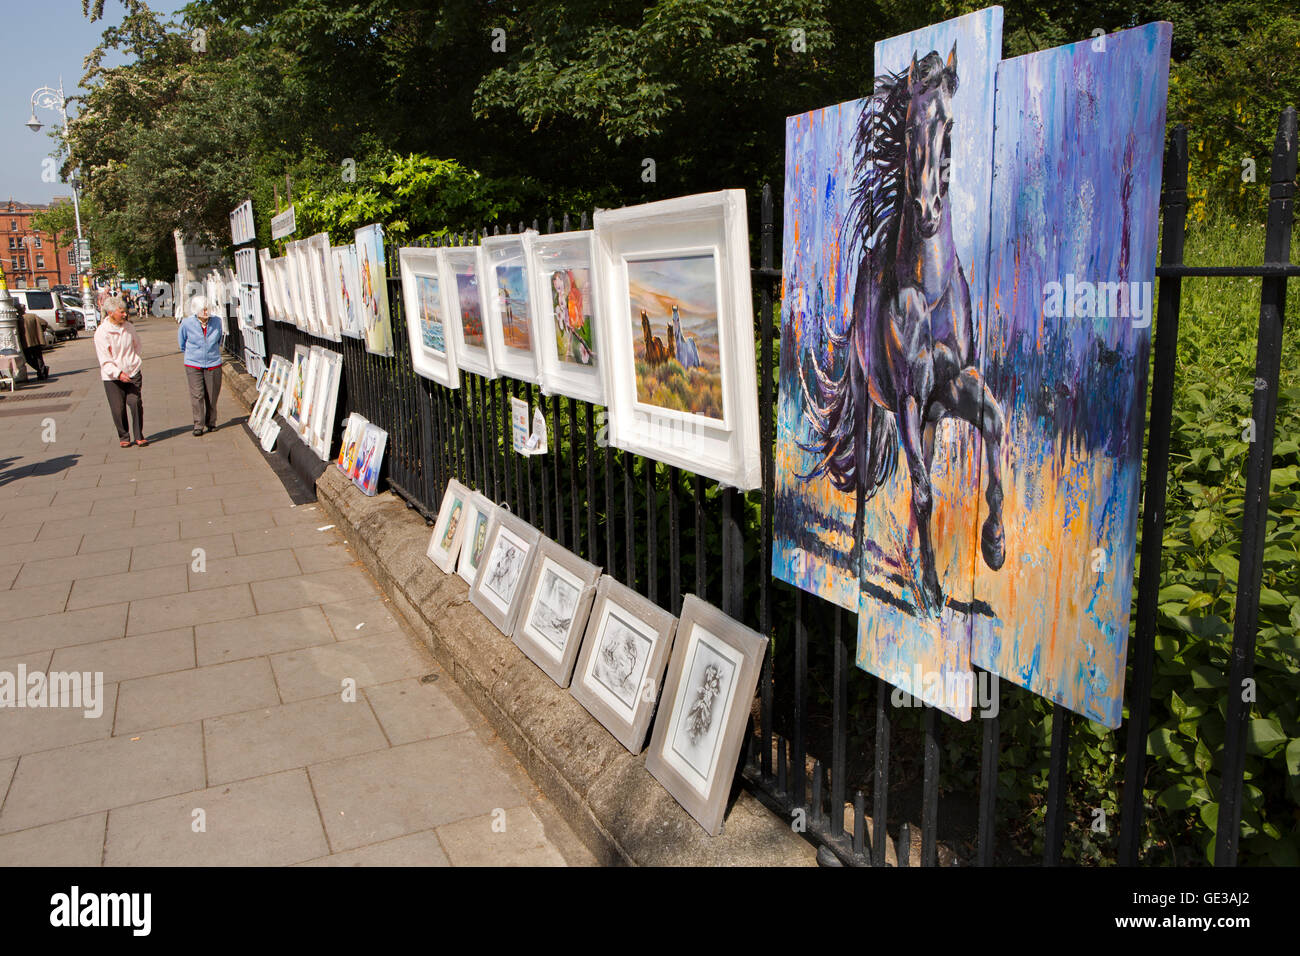 Ireland, Dublin, Merrion Square West, Sunday art market, paintings hanging on railings Stock Photo